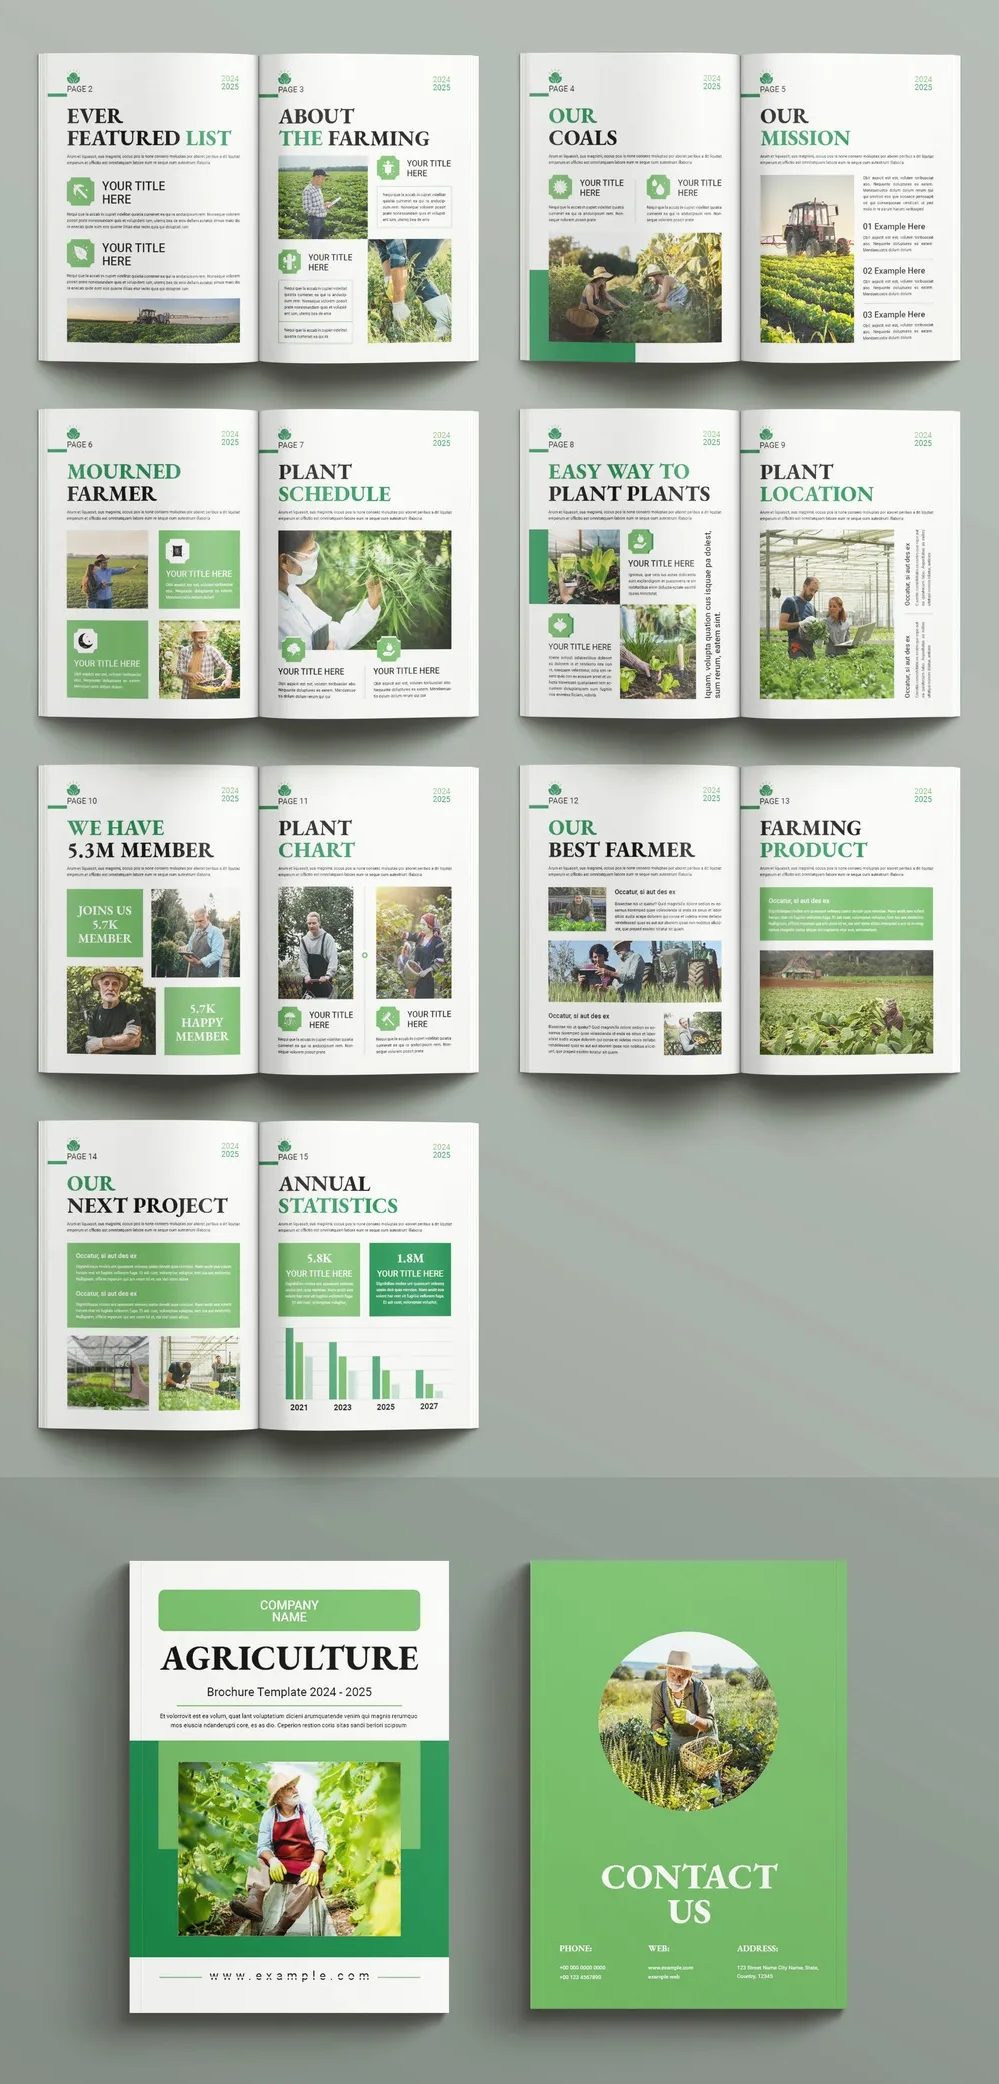 Adobestock - Agriculture Design Layout Brochure Template 716694189